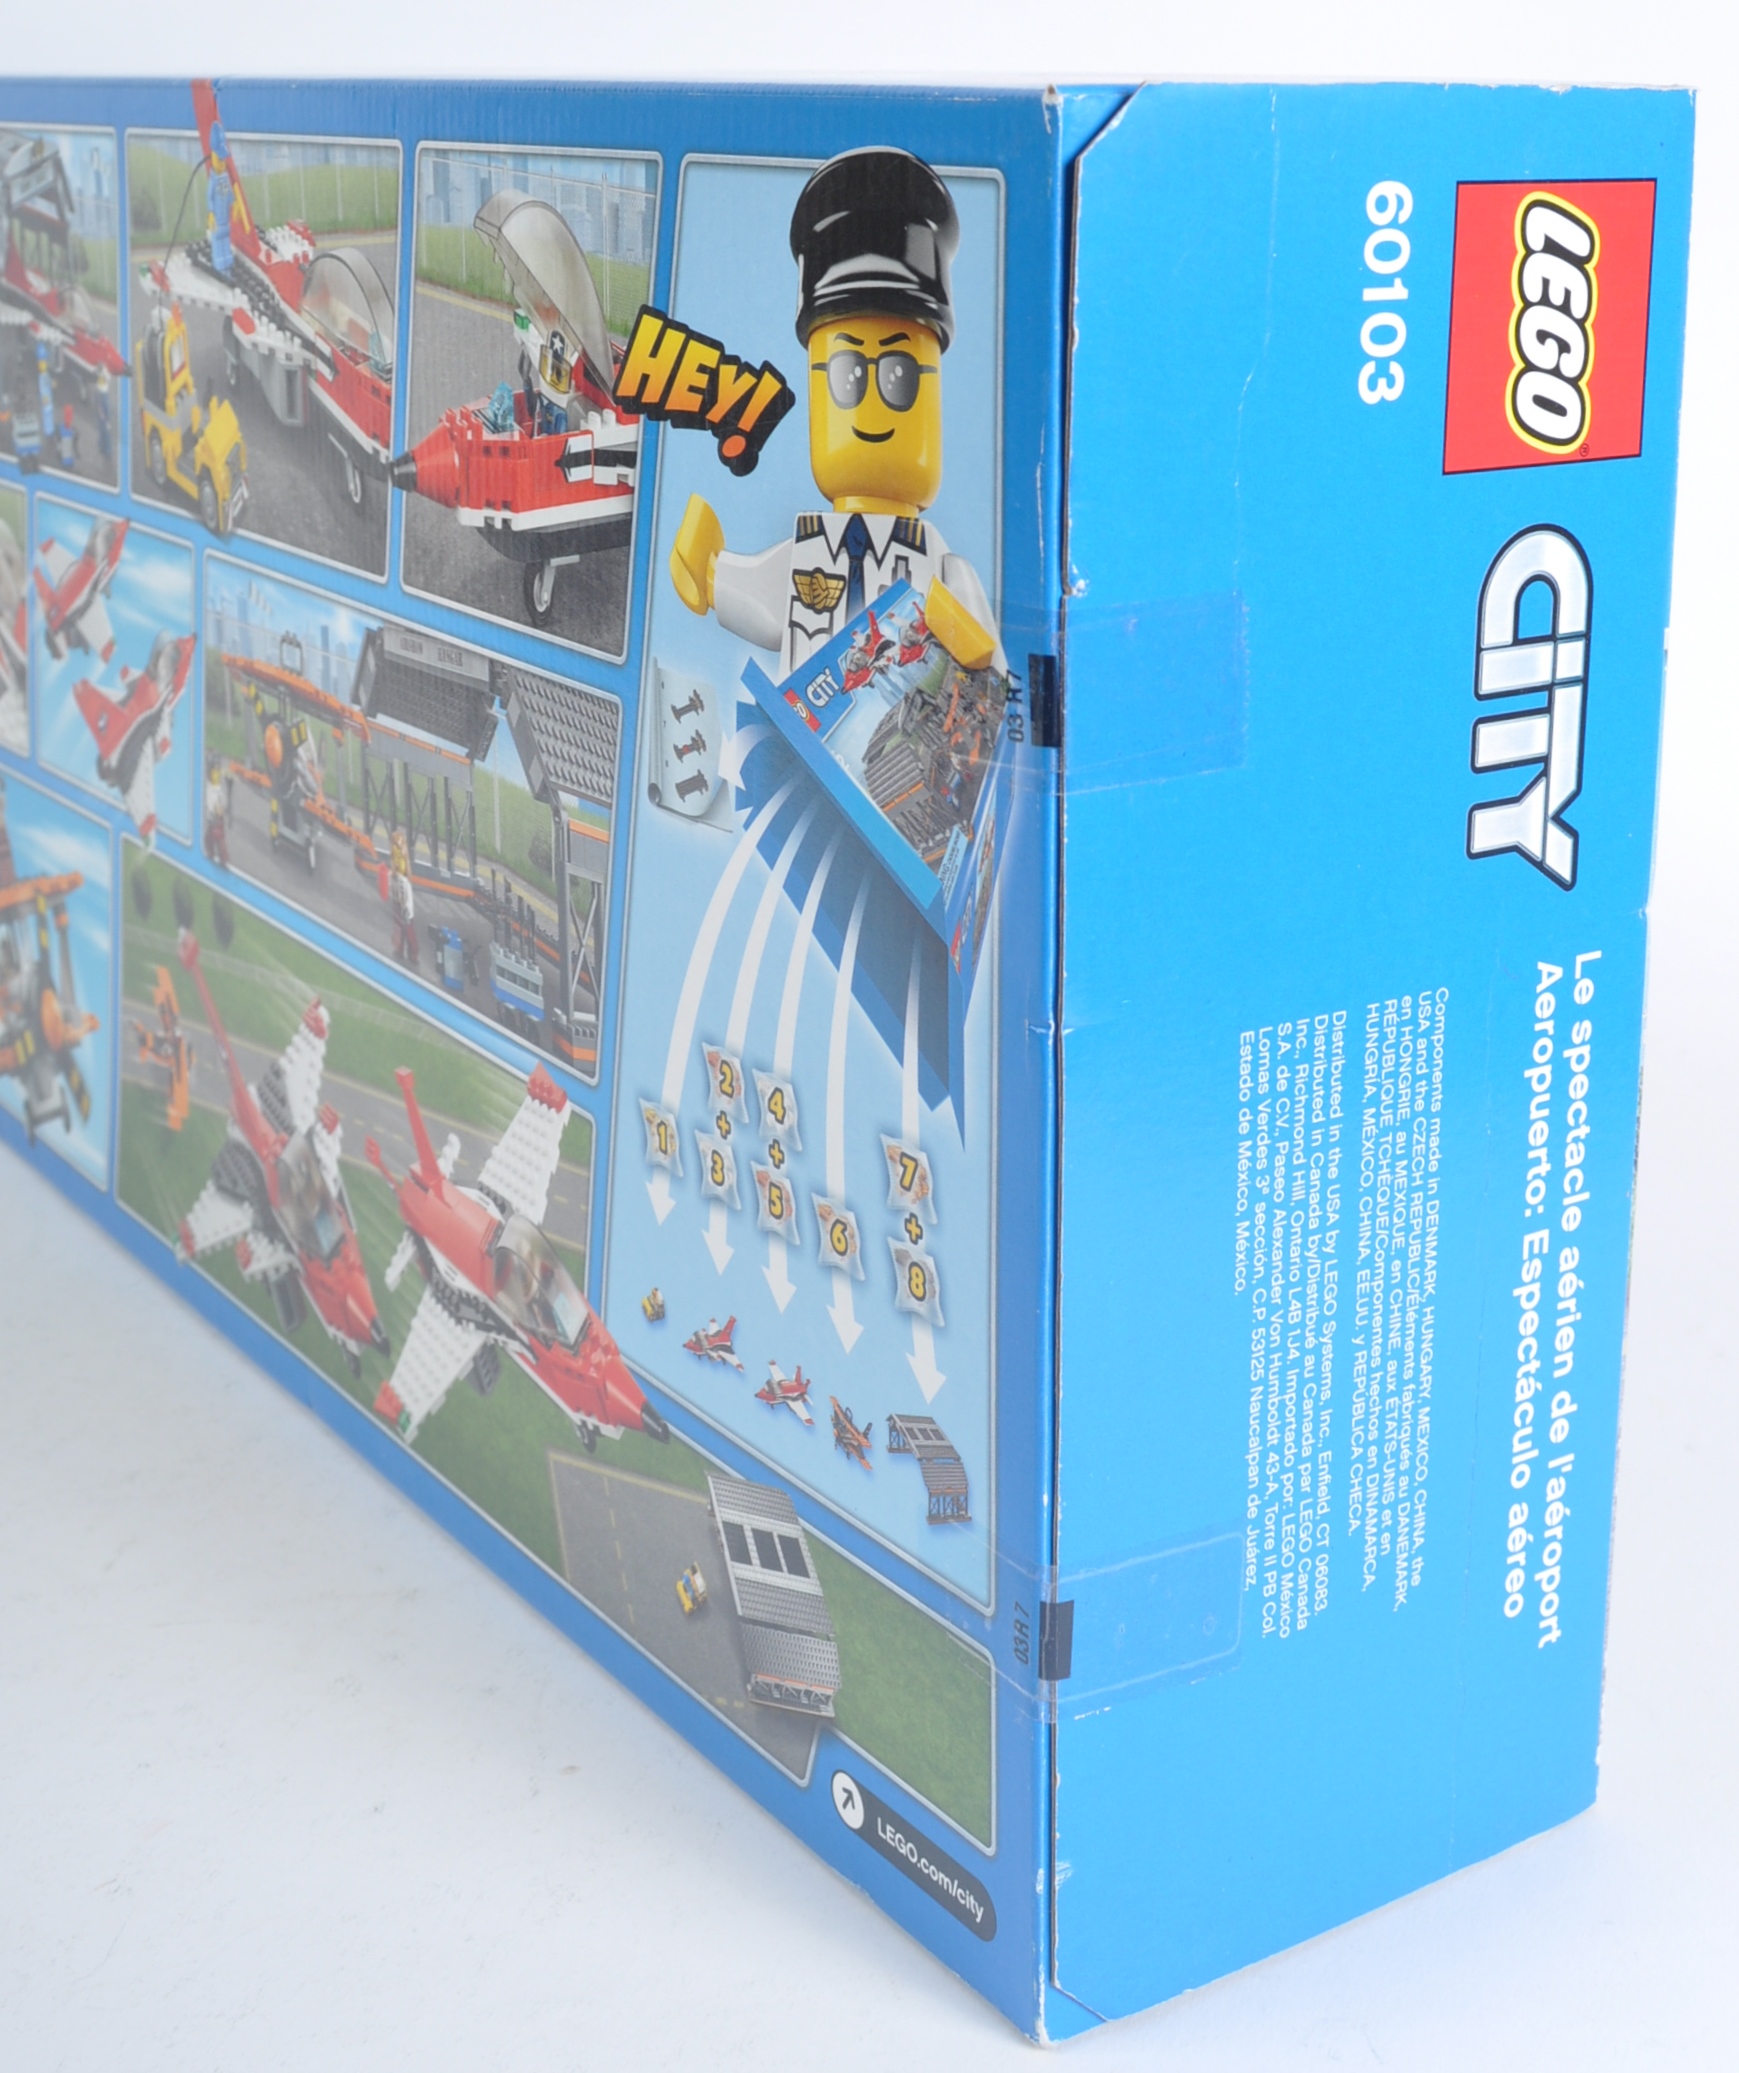 LEGO SET - LEGO CITY - 60103 - AIRPORT AIR SHOW - Image 3 of 4